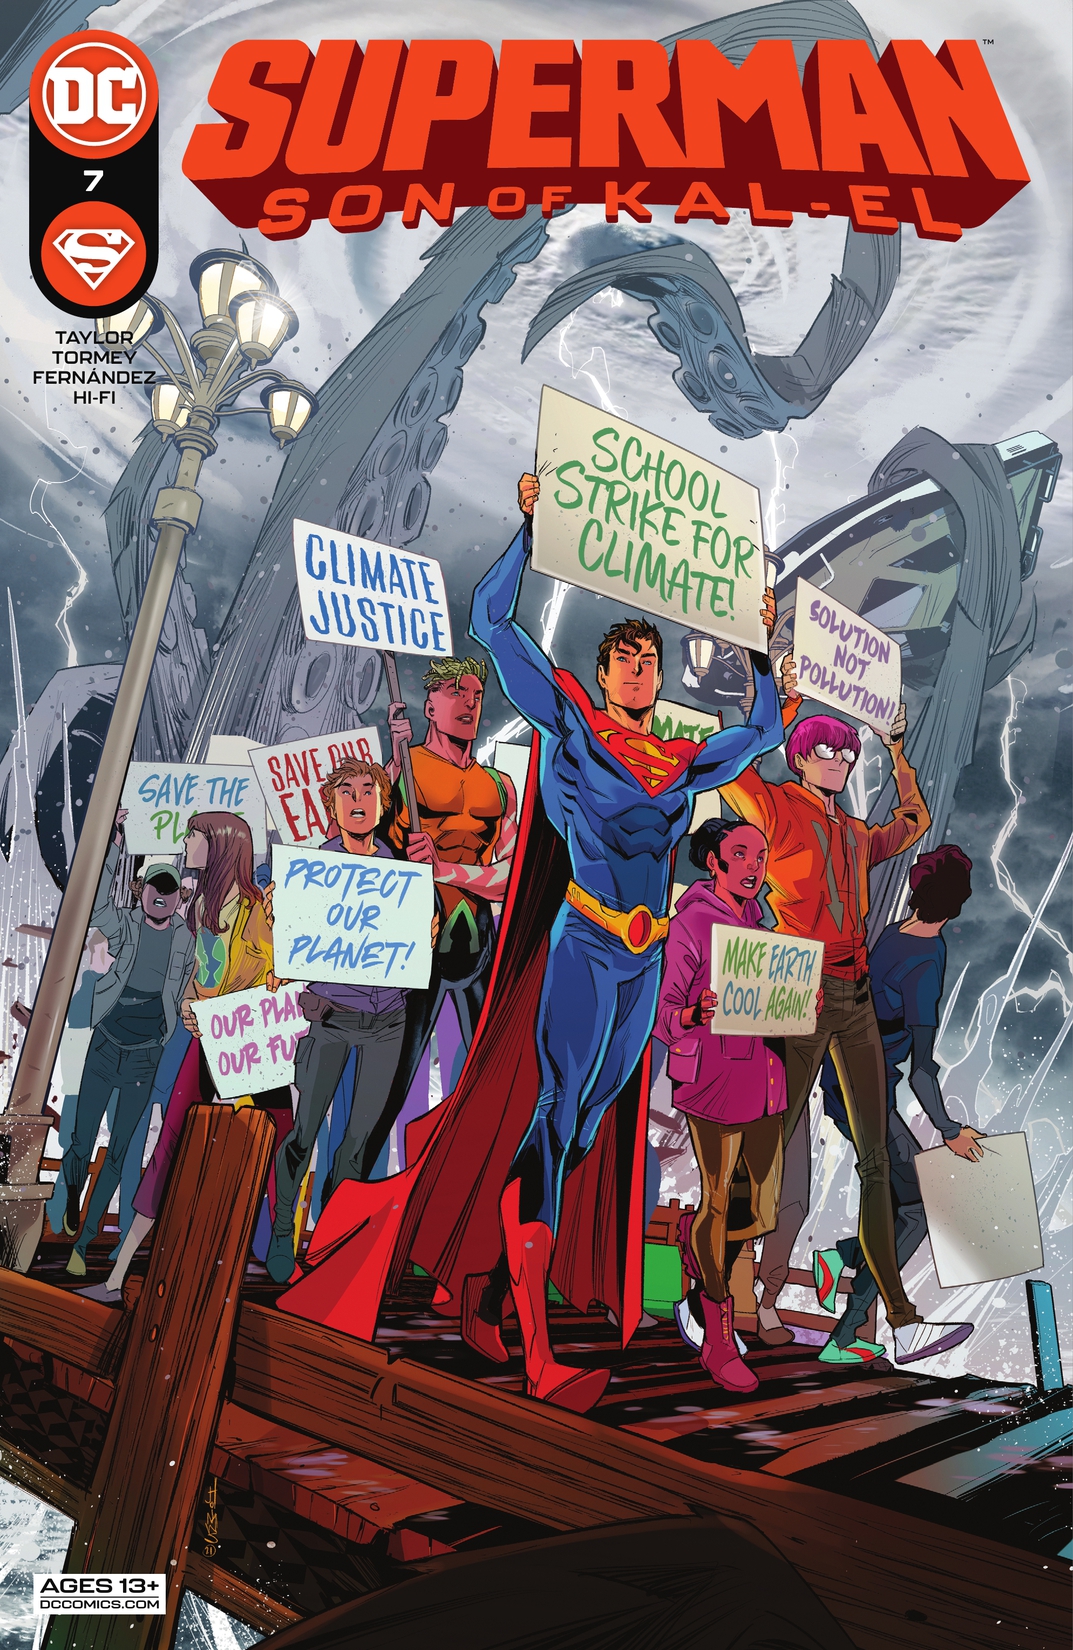 Superman: Son of Kal-El #7 preview images